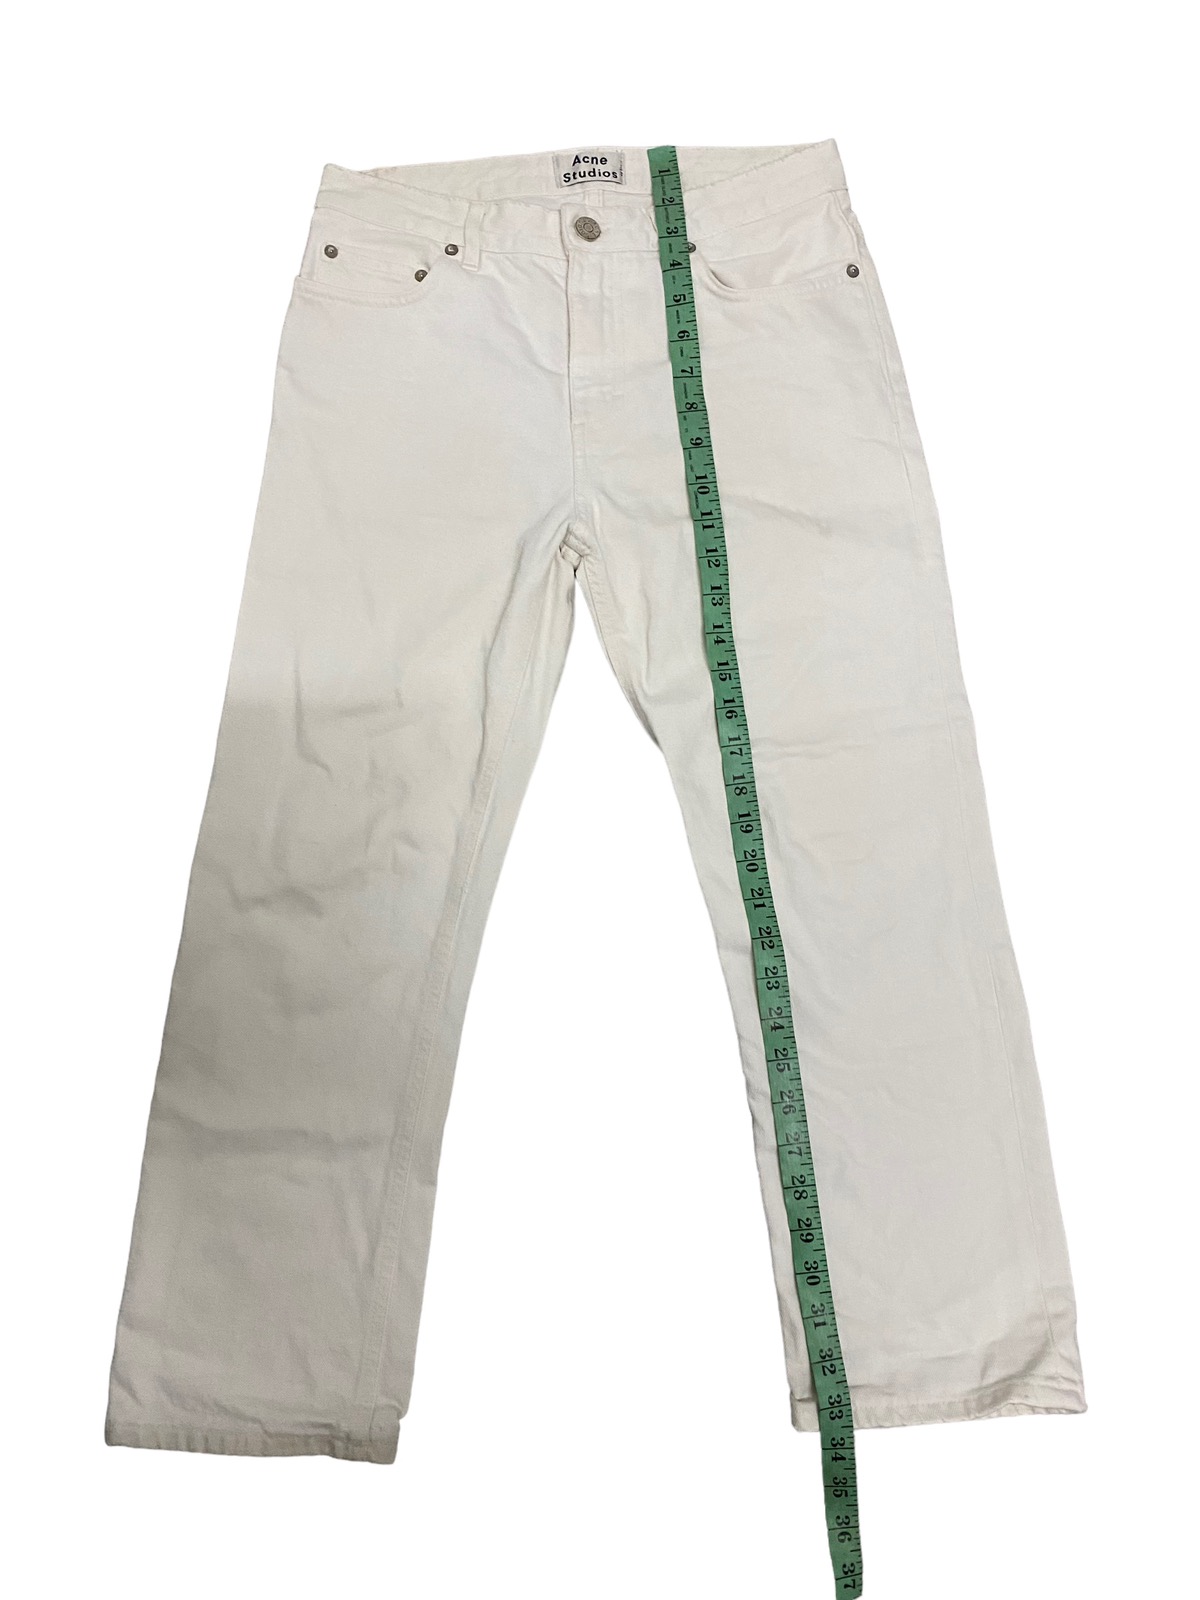 Vintage Acne Studios Pop White Denim Jeans - 15